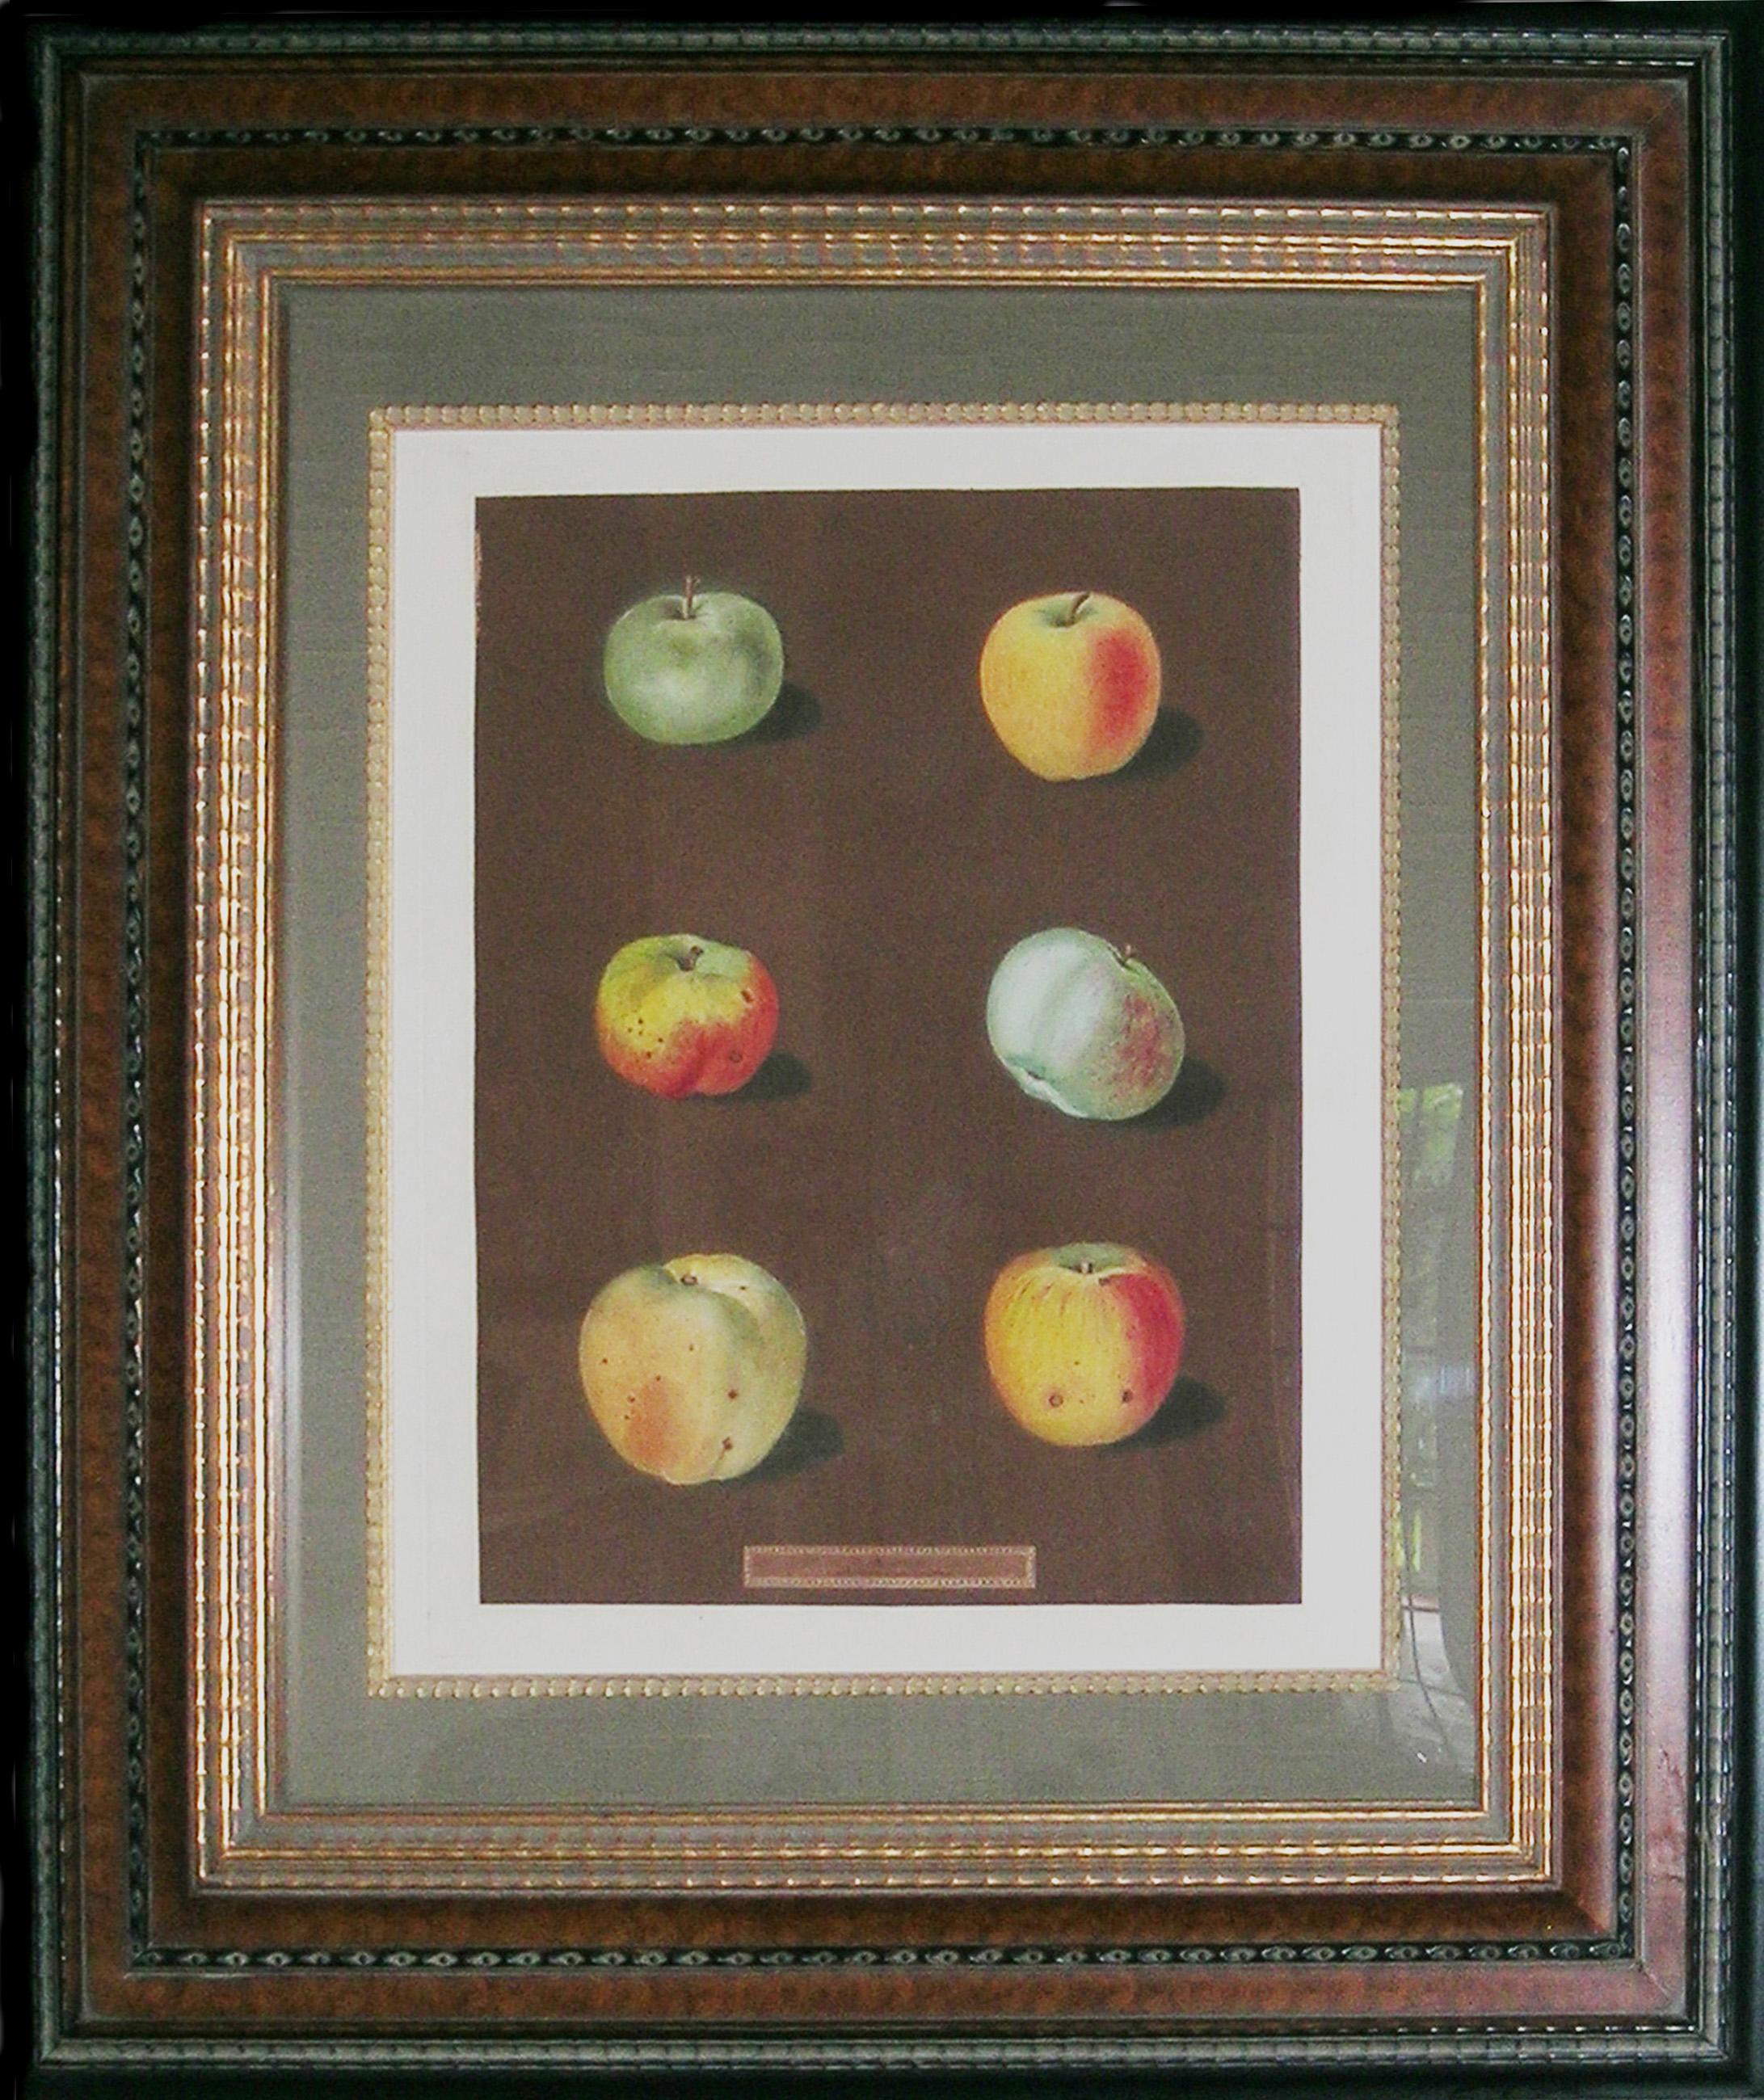 Plate 88.  Apples. - Academic Print by george brookshaw